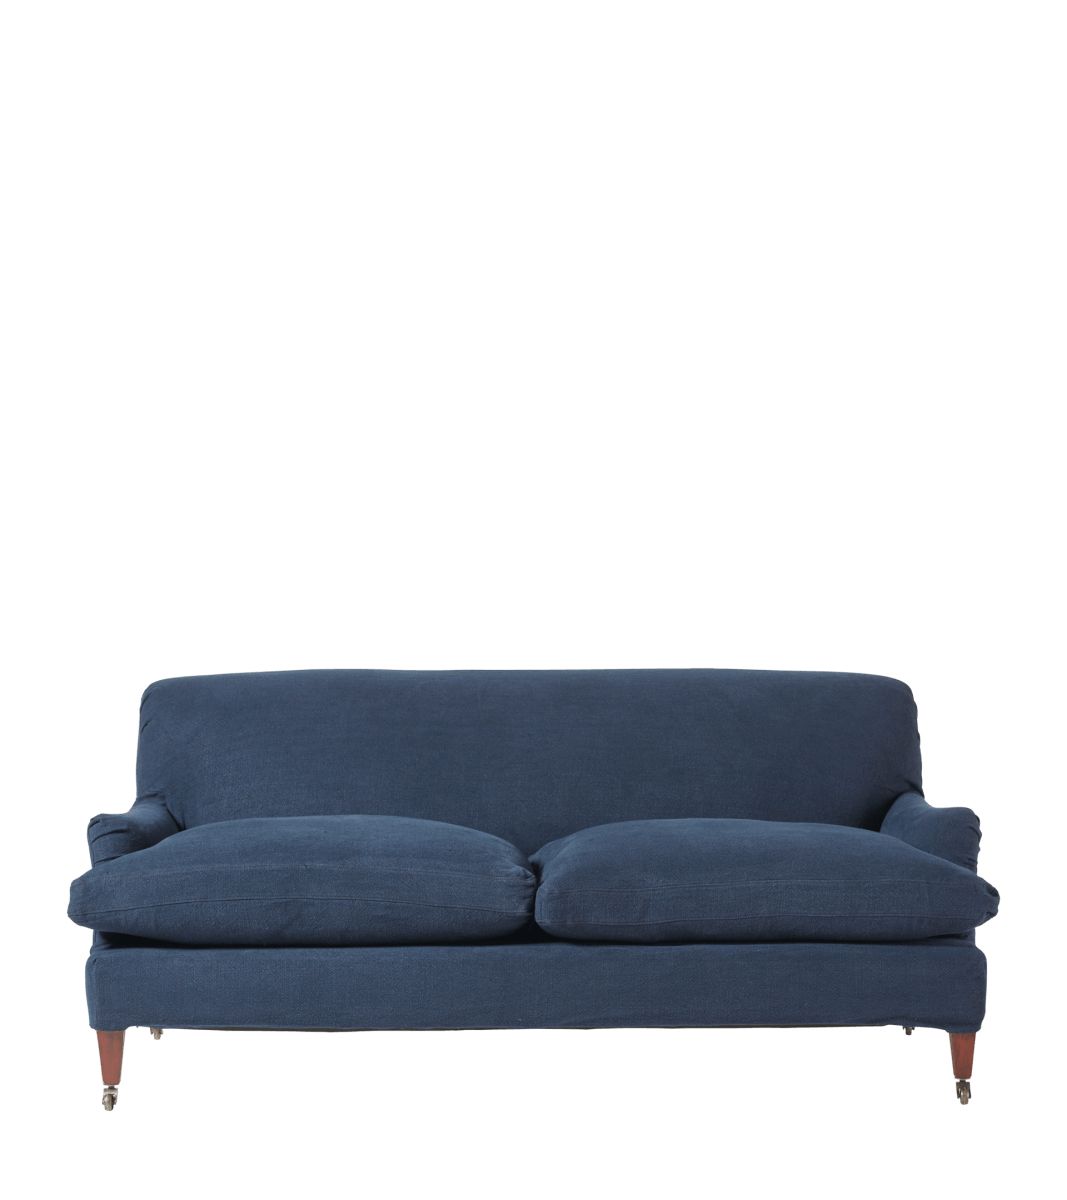 Linen Slip cover For Coleridge 3-Seater Sofa - Pure Navy | OKA US